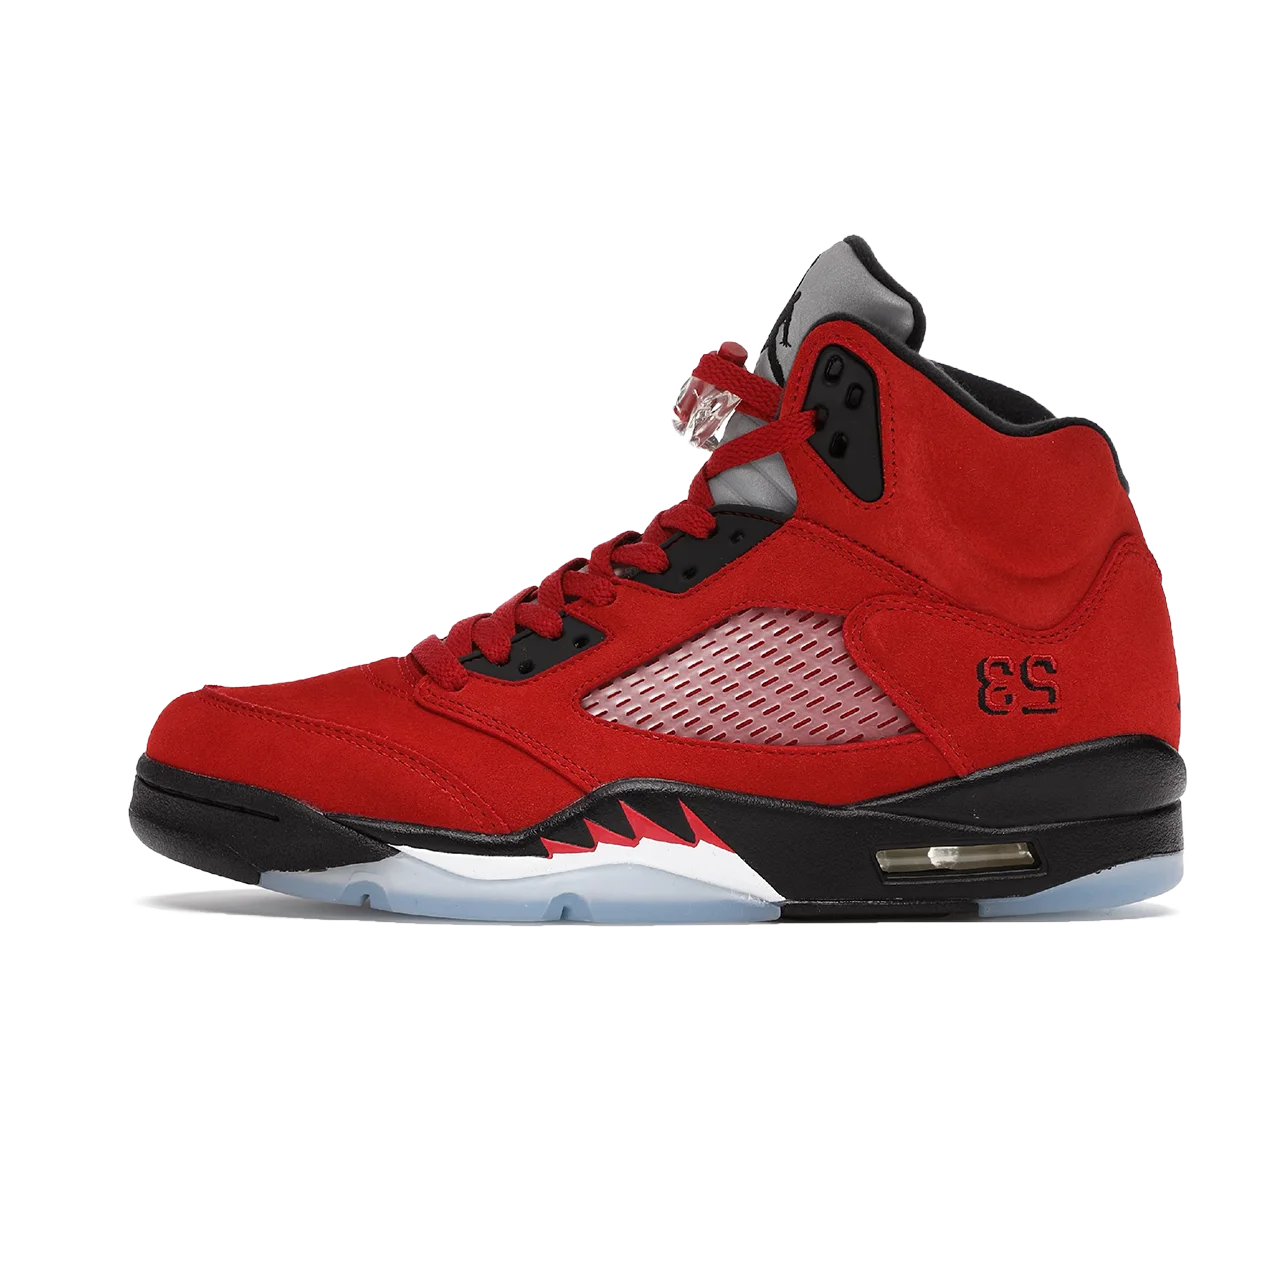 

Jordan 5 Retro Raging Bull Red Original Box men's women's fashion casual sports basketball running shoes high quality sneakers